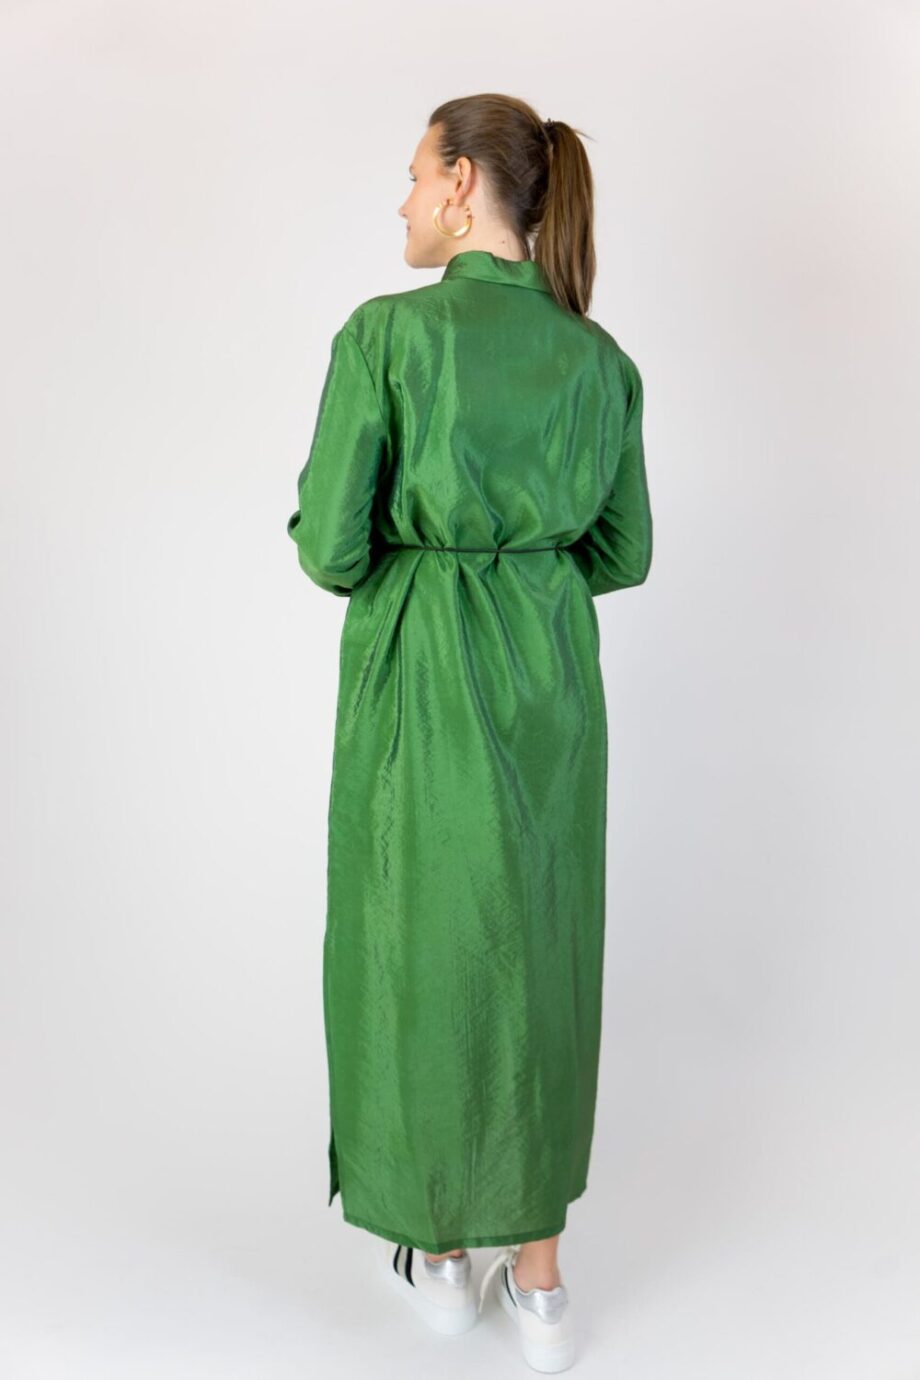 Fabiana Filippi green dress back